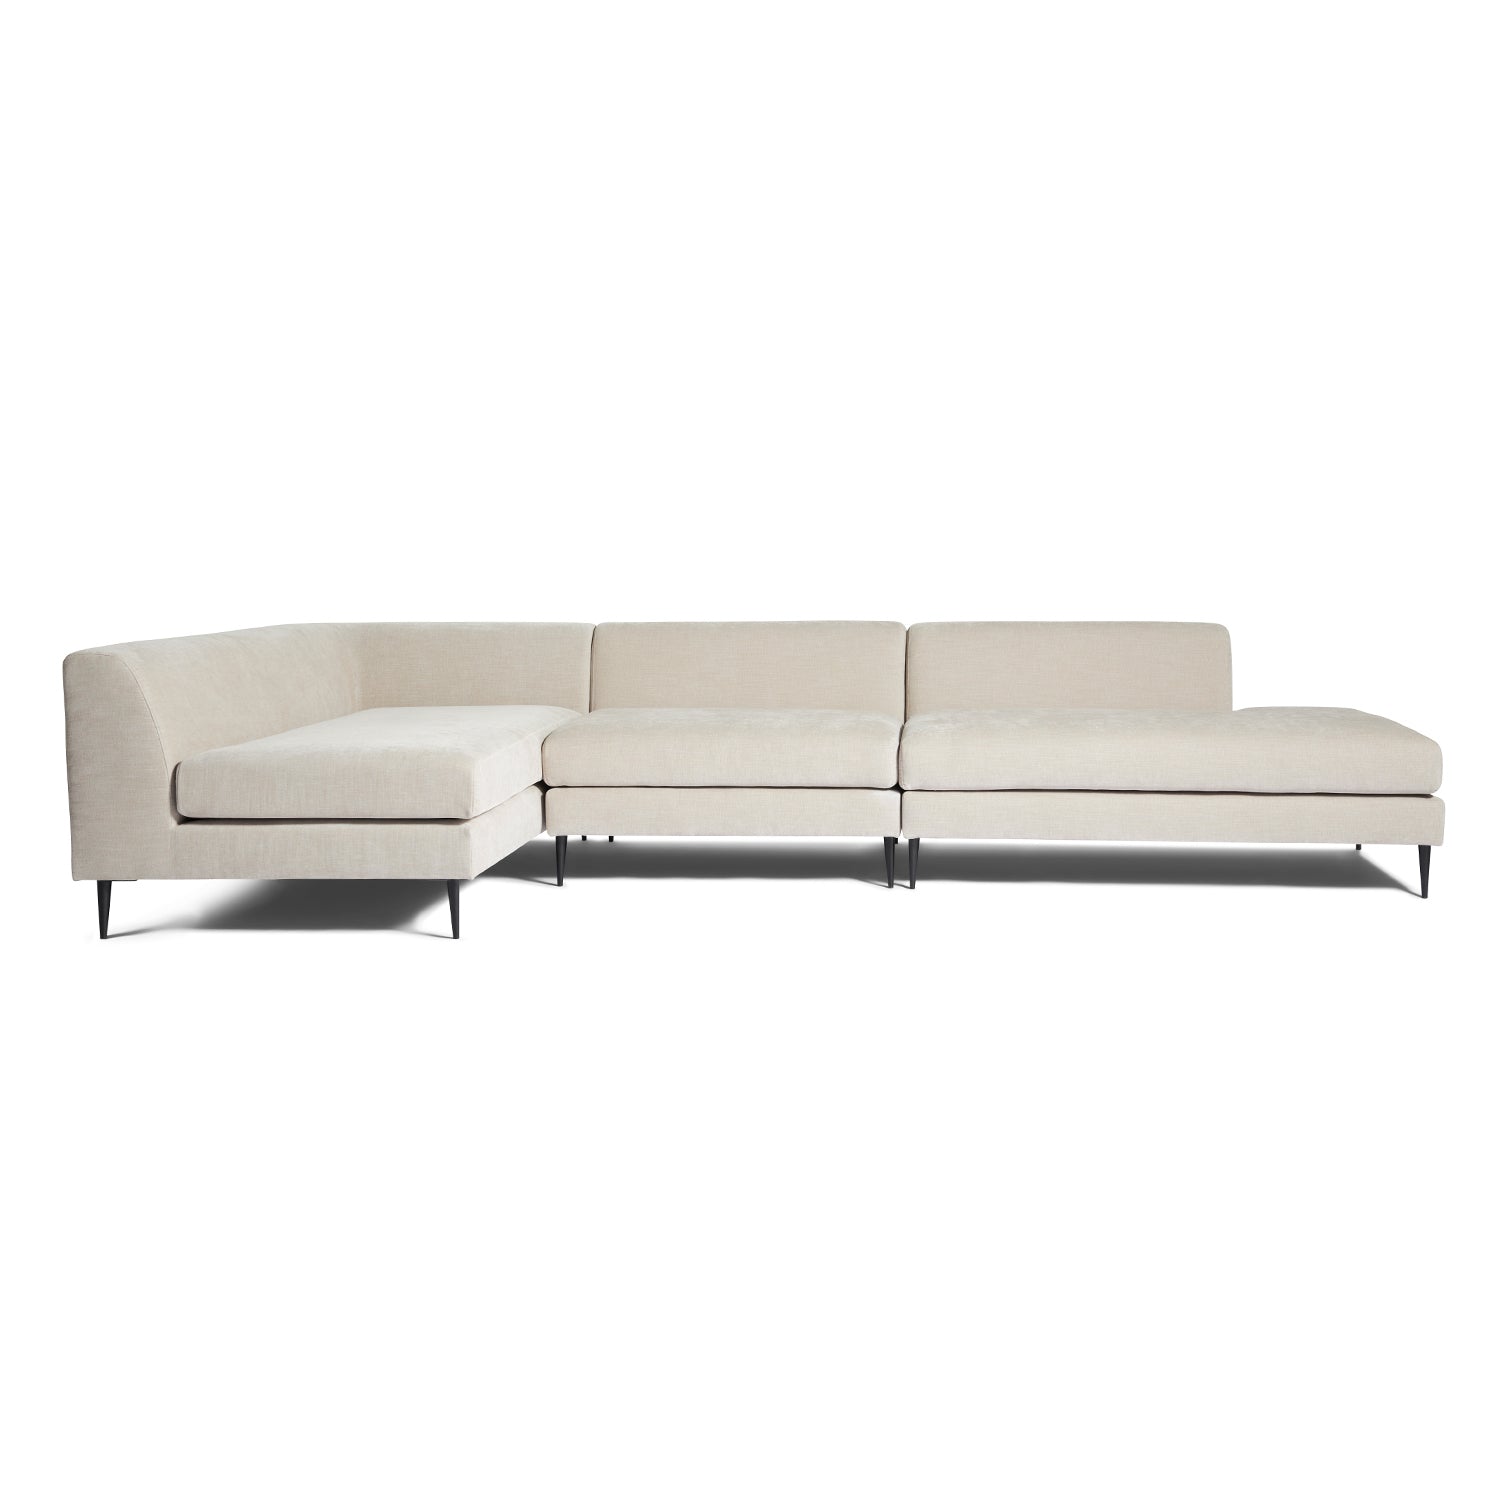 Malaga chaiselong sofa m. hvilemodul venstrevendt - Møbelkompagniet